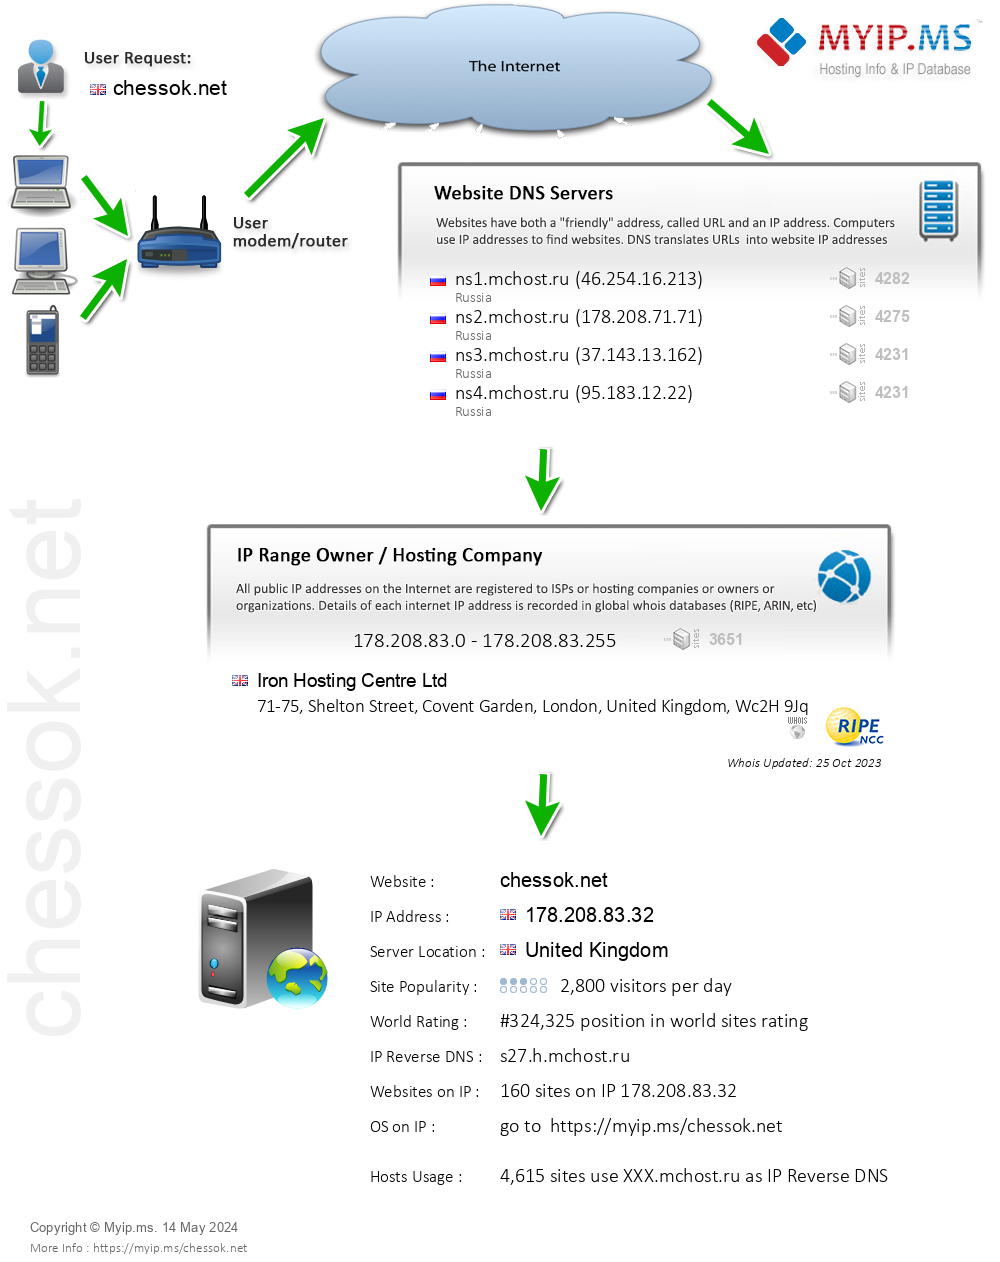 Chessok.net - Website Hosting Visual IP Diagram